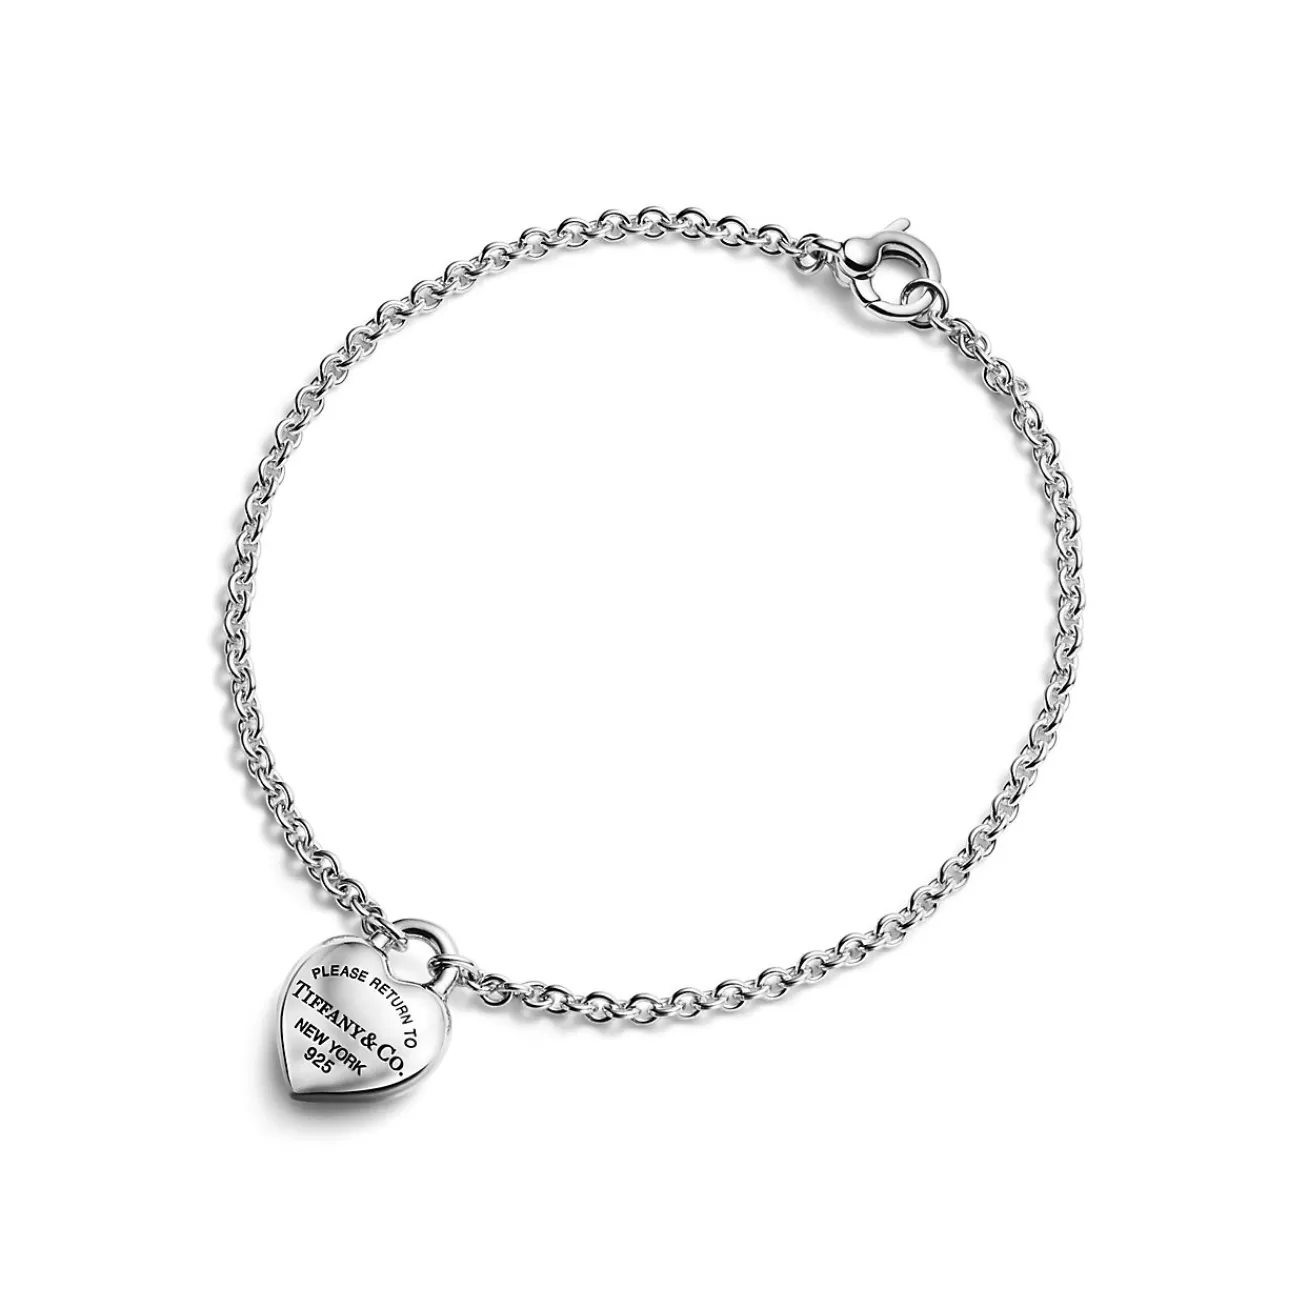 Tiffany & Co. Return to Tiffany® Full Heart Bracelet in Sterling Silver | ^ Bracelets | Gifts for Her